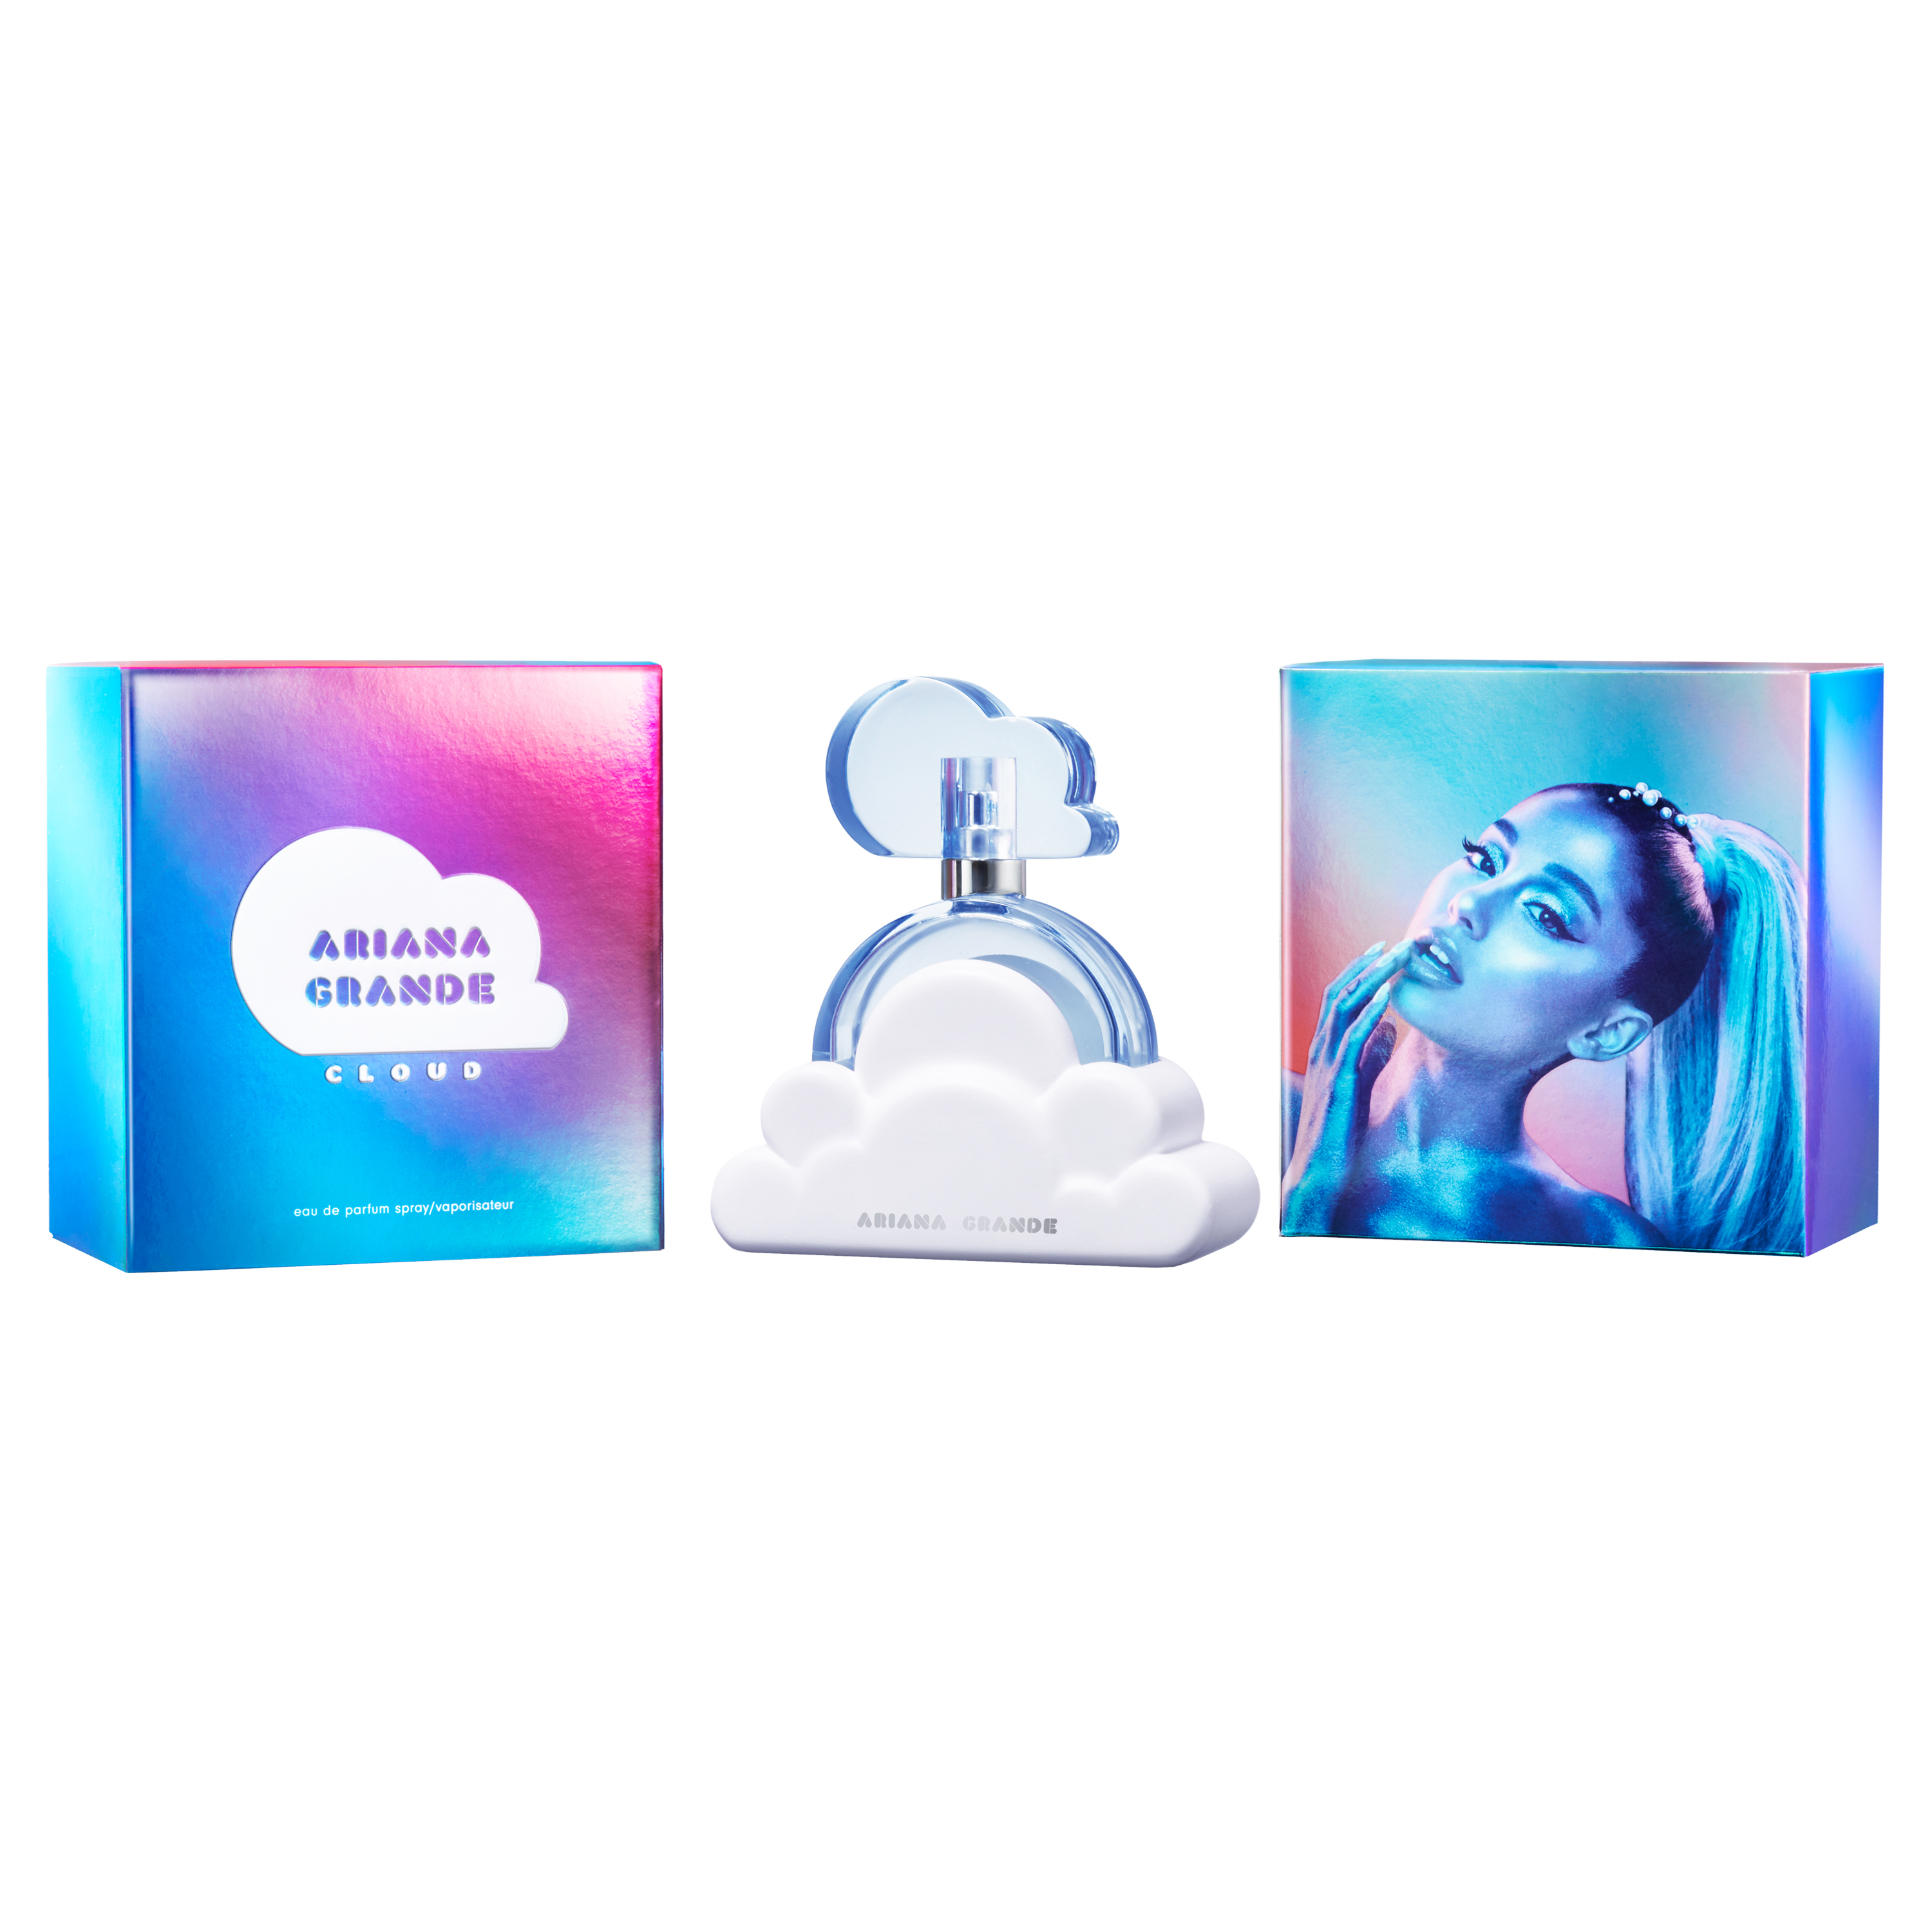 Ariana Grande Cloud Eau De Parfum, Perfume for Women, 3.4 oz - image 3 of 3